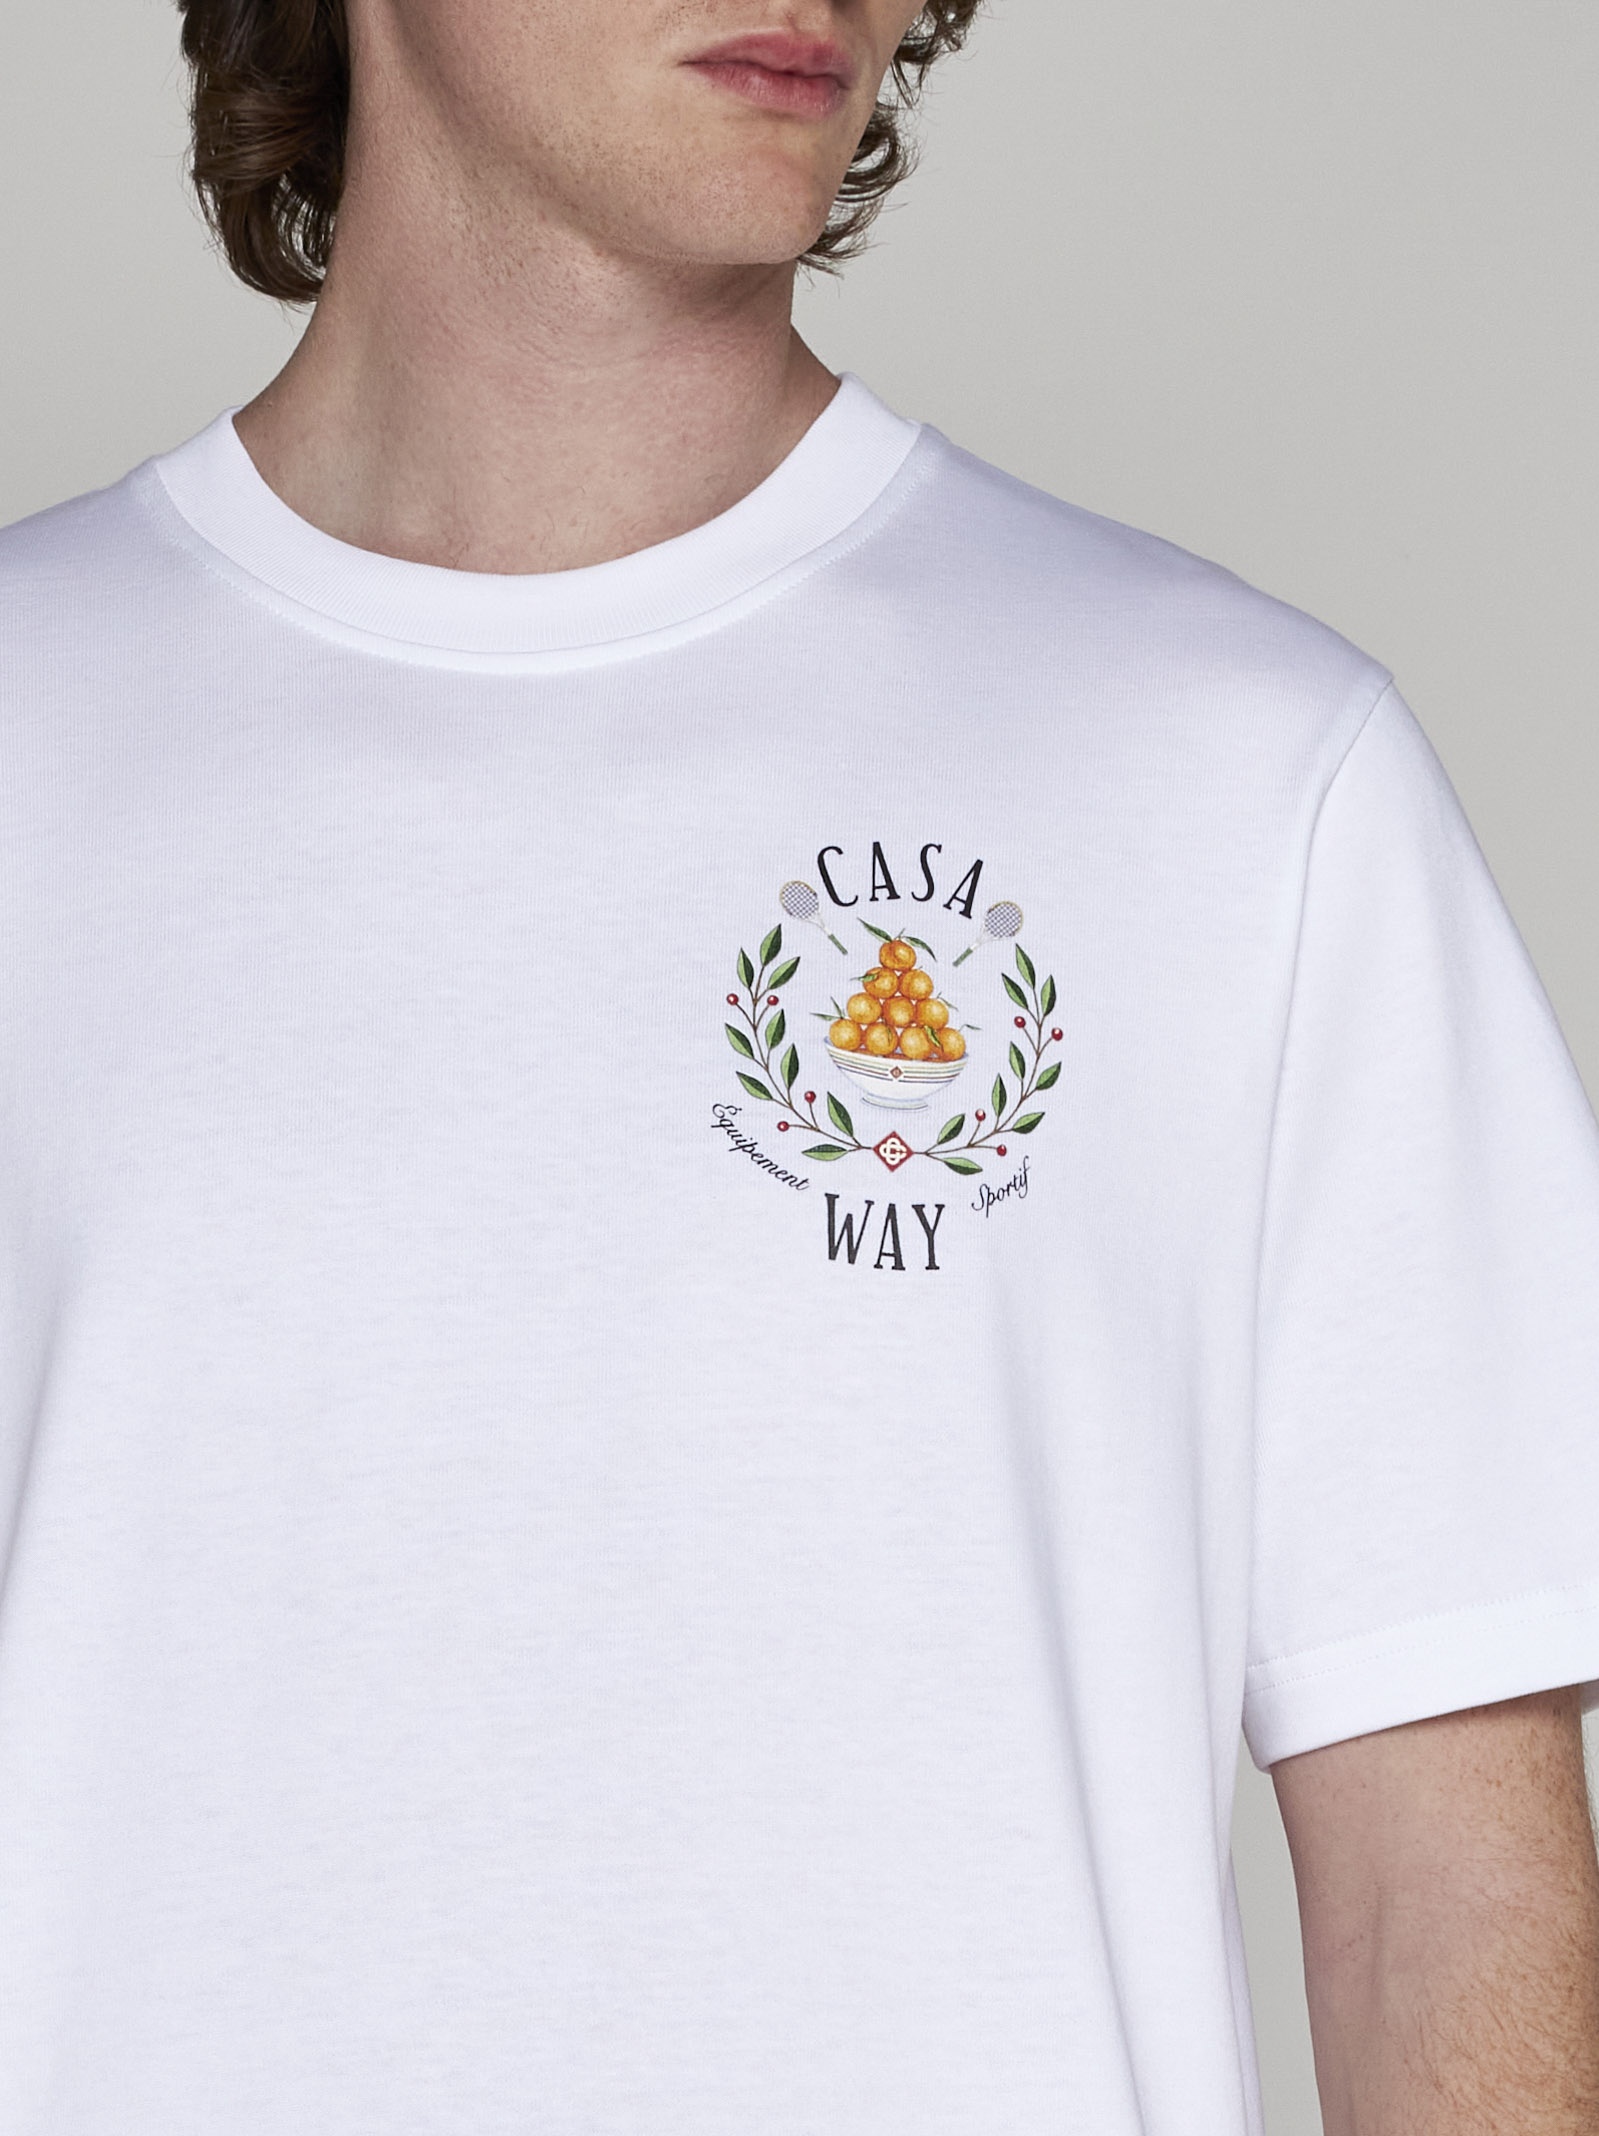 Casa Way cotton t-shirt - 5